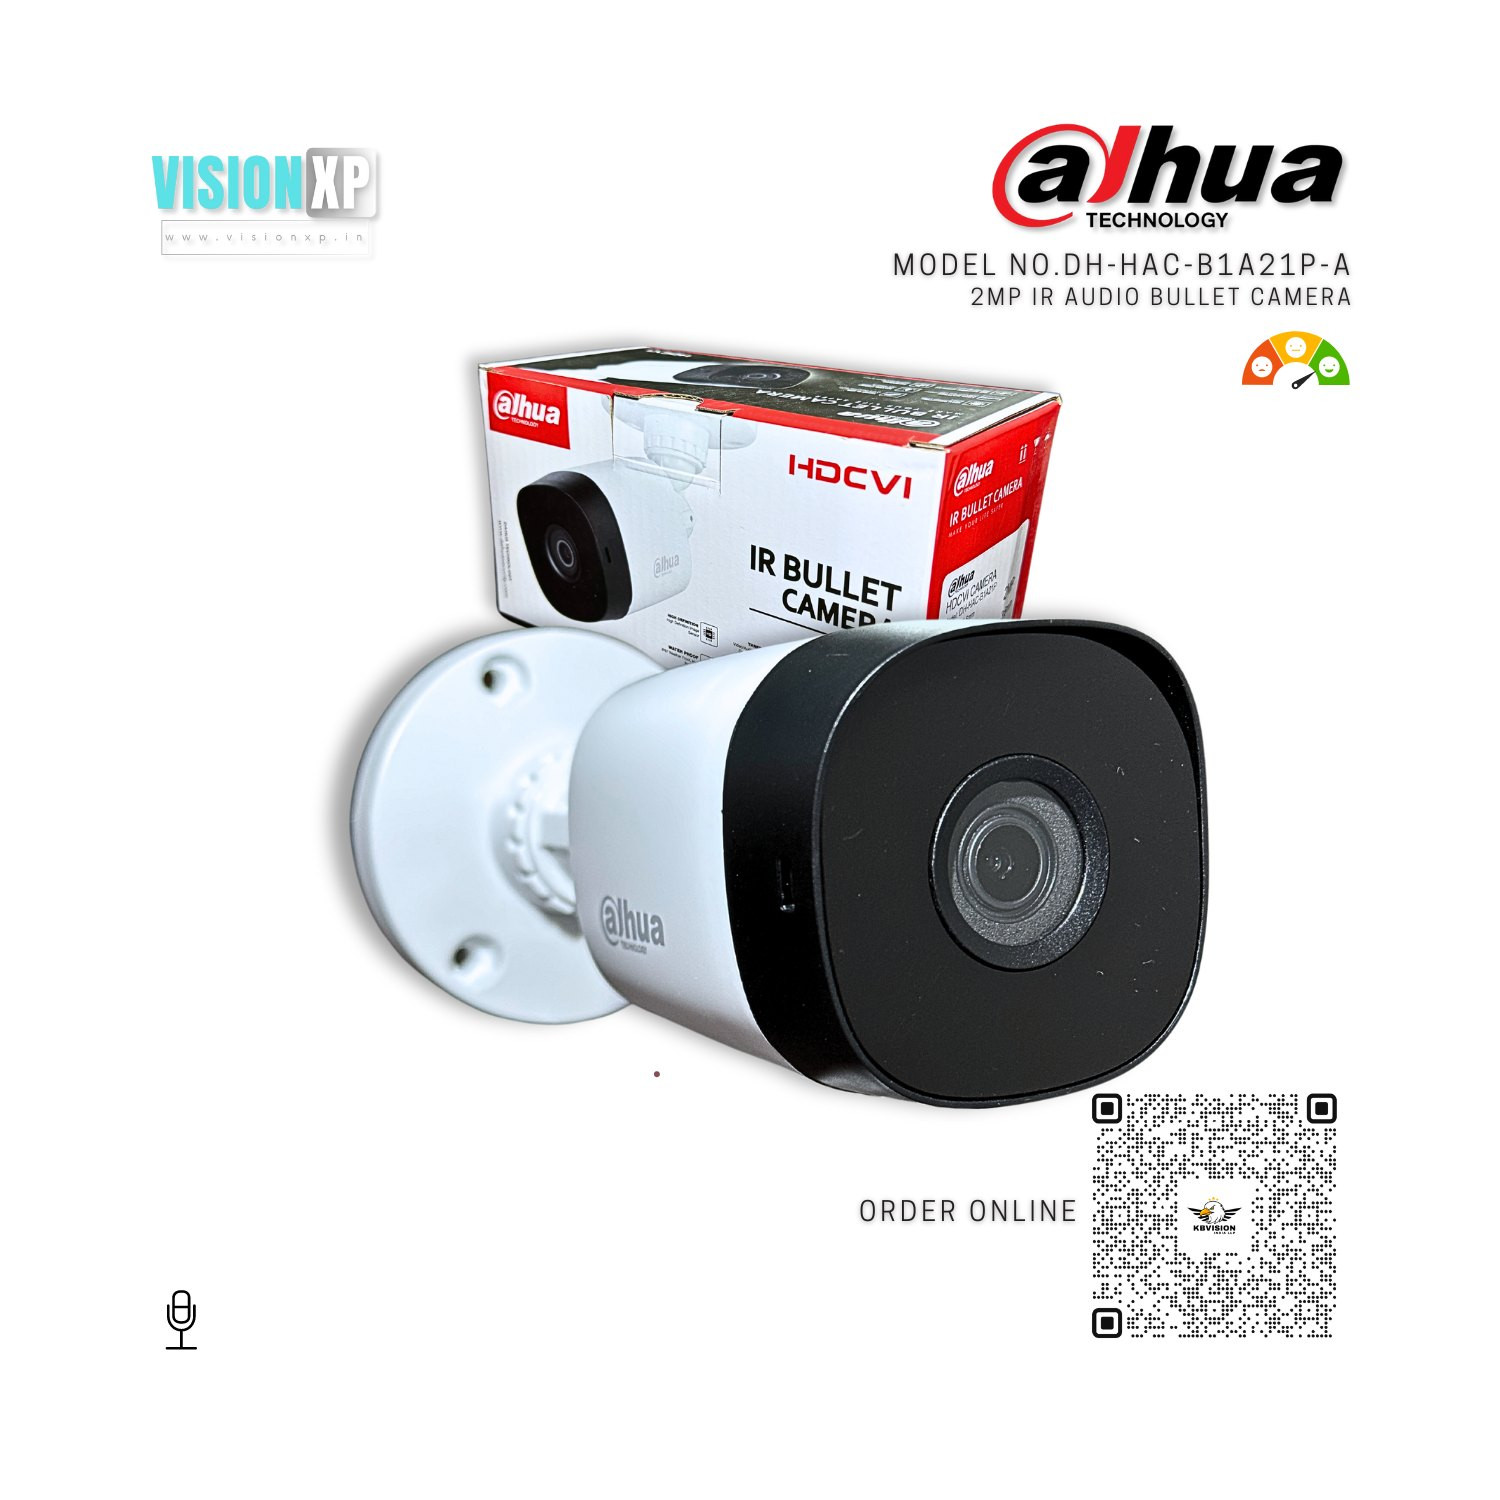 Dahua DH-HAC-B1A21P-A 2mp in built Audio Bullet Camera